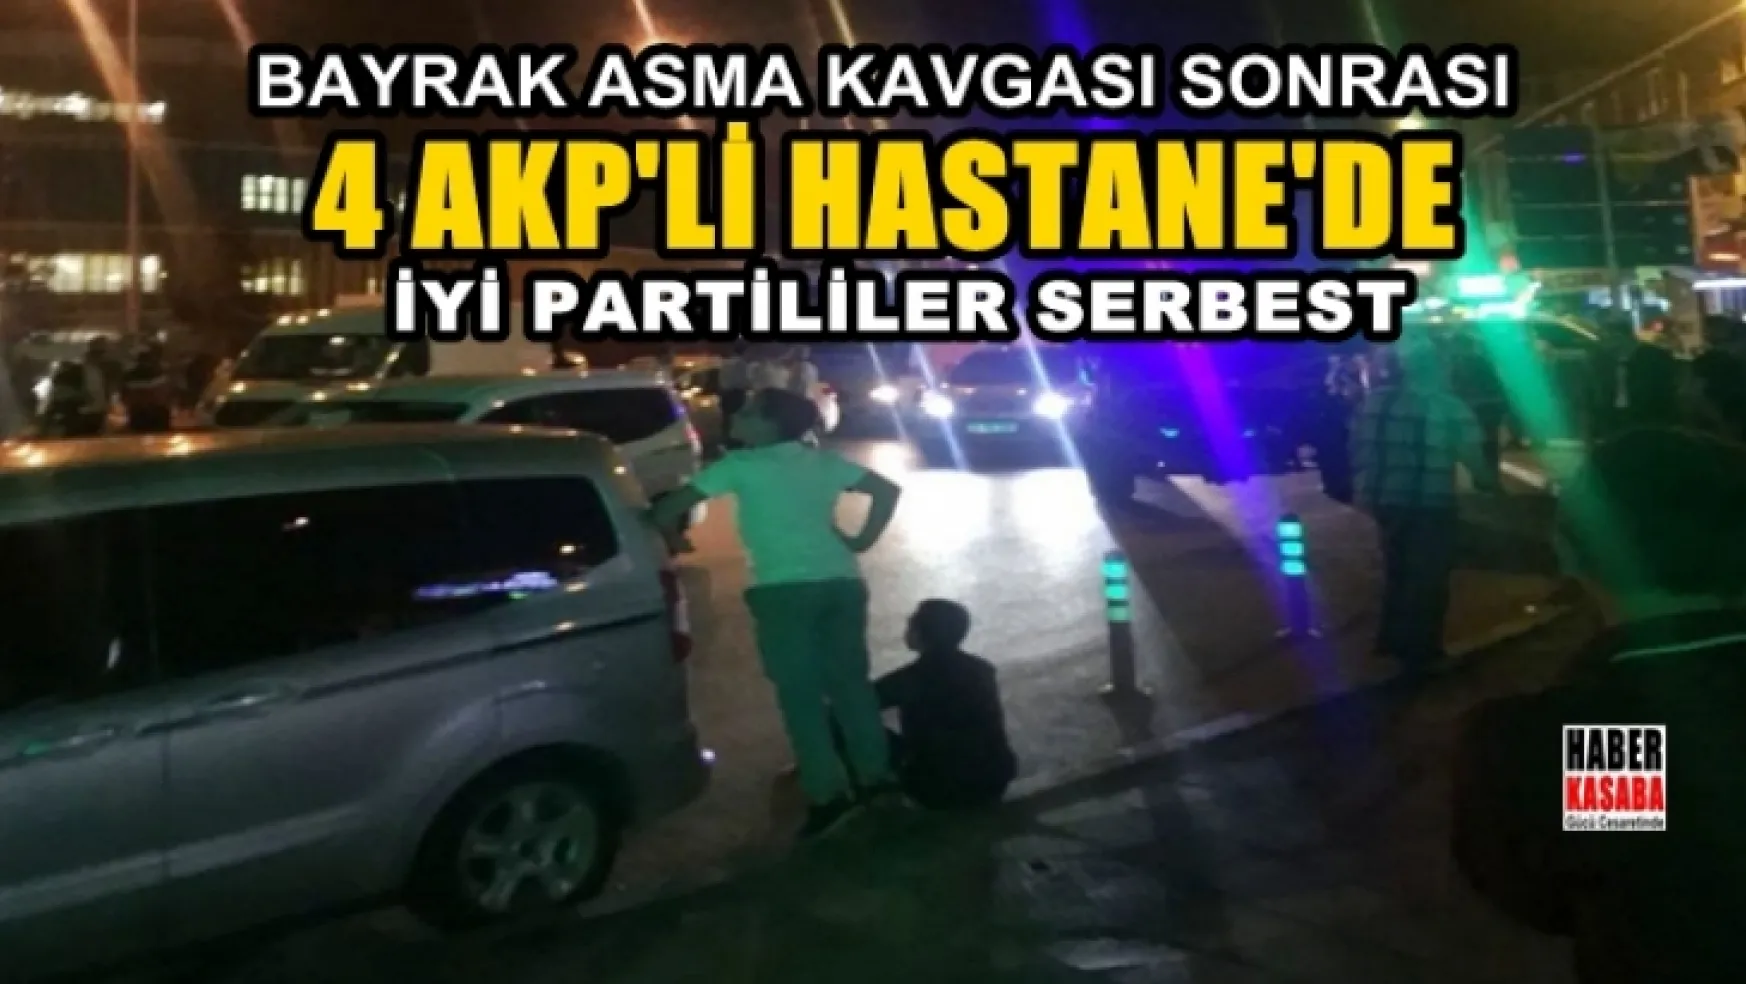 Bayrak asma kavgasında: 4 yaralı! AKP'liler hastanede, İYİ Partililer serbest